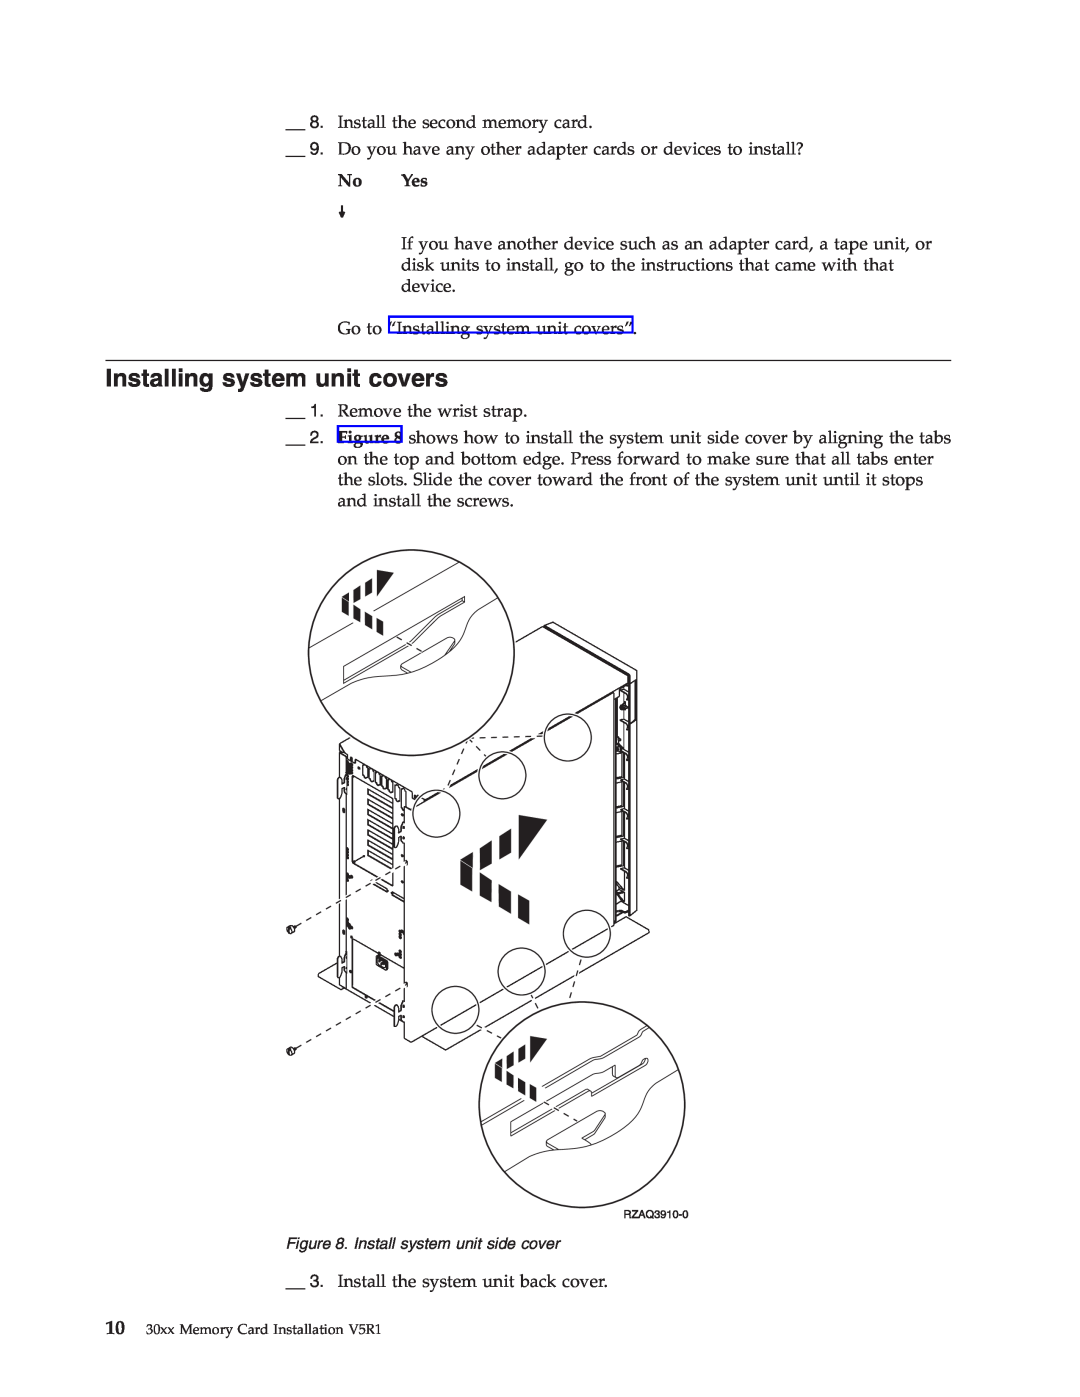 IBM SENG-3002-01 manual Installing system unit covers, No Yes 